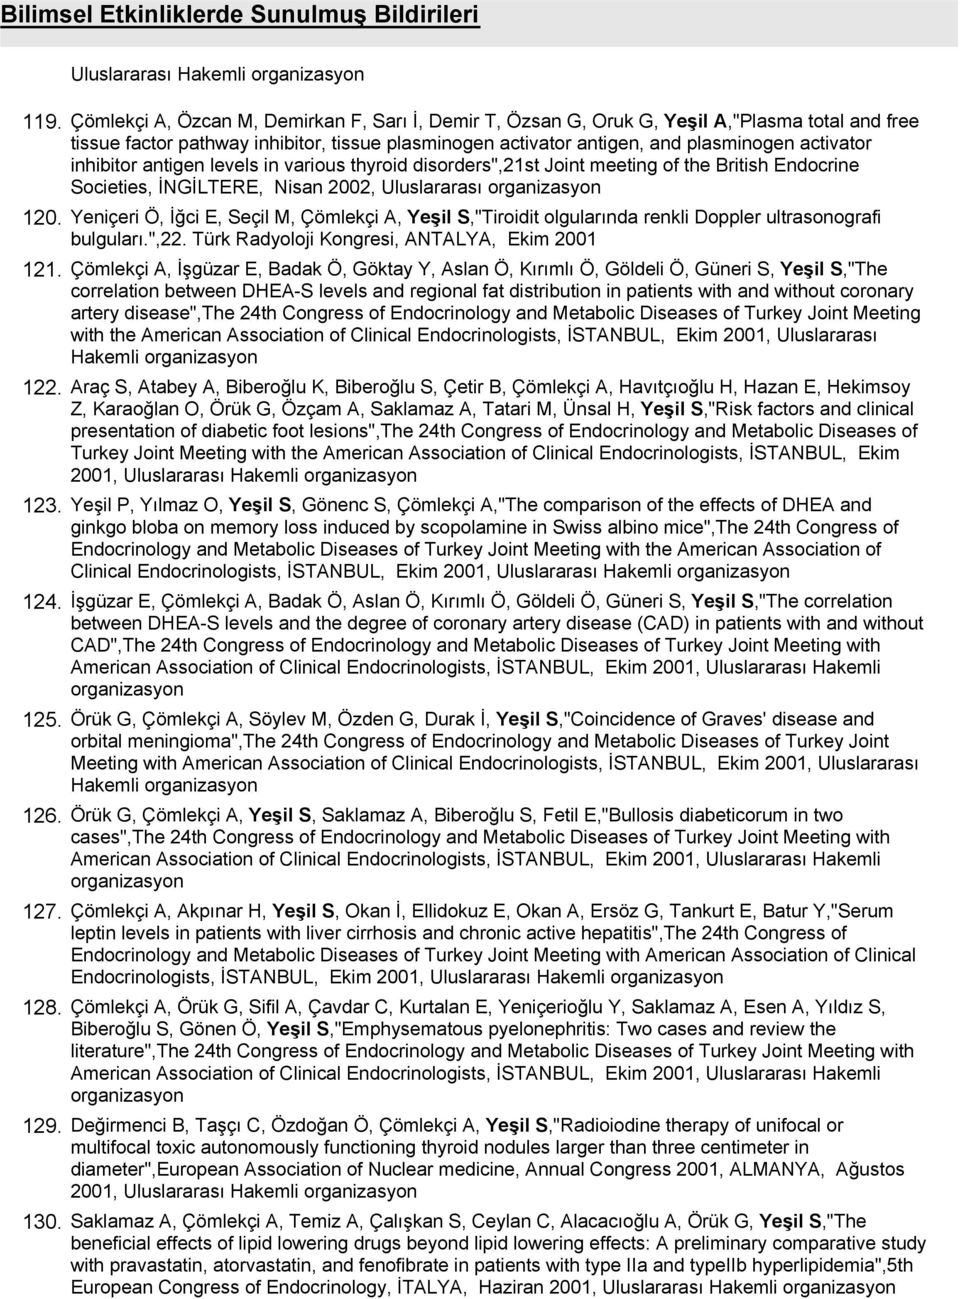 plasminogen activator inhibitor antigen levels in various thyroid disorders",21st Joint meeting of the British Endocrine Societies, İNGİLTERE, Nisan 2002, Uluslararası Yeniçeri Ö, İğci E, Seçil M,